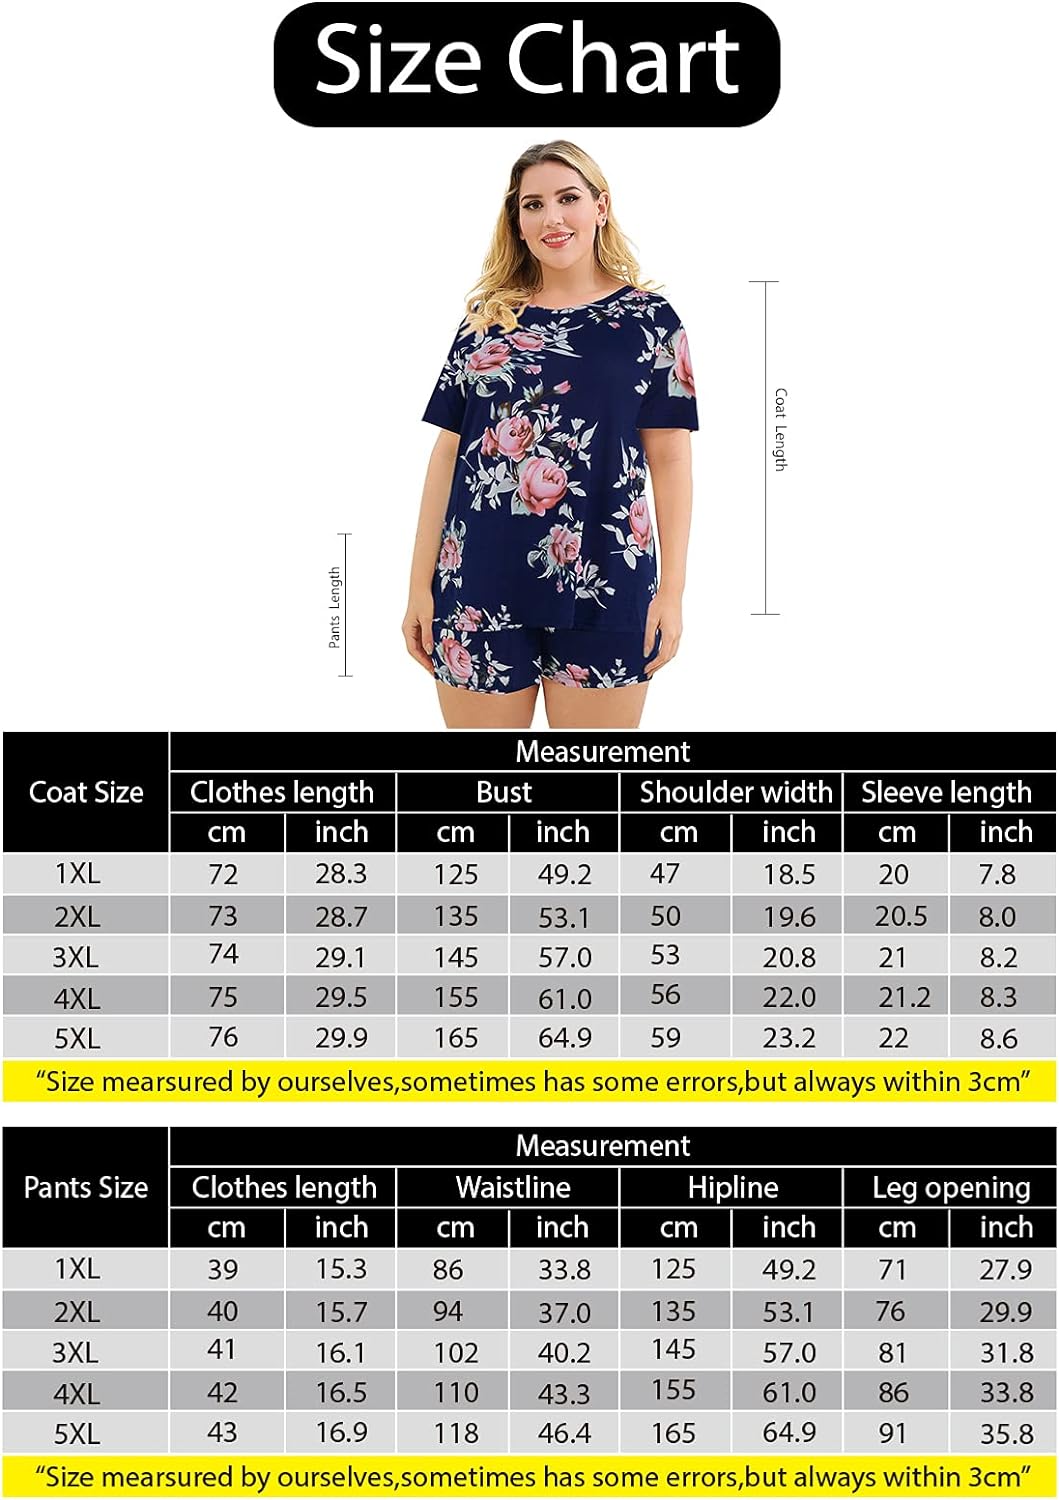 Celkuser Women's Plus Size Short Sleeve Summer Casual 2 Piece Pajama Sets Loungewear Sleepwear Pjs Pocket 3X 4X 5X CEL109 - A Cozy and Stylish Choice